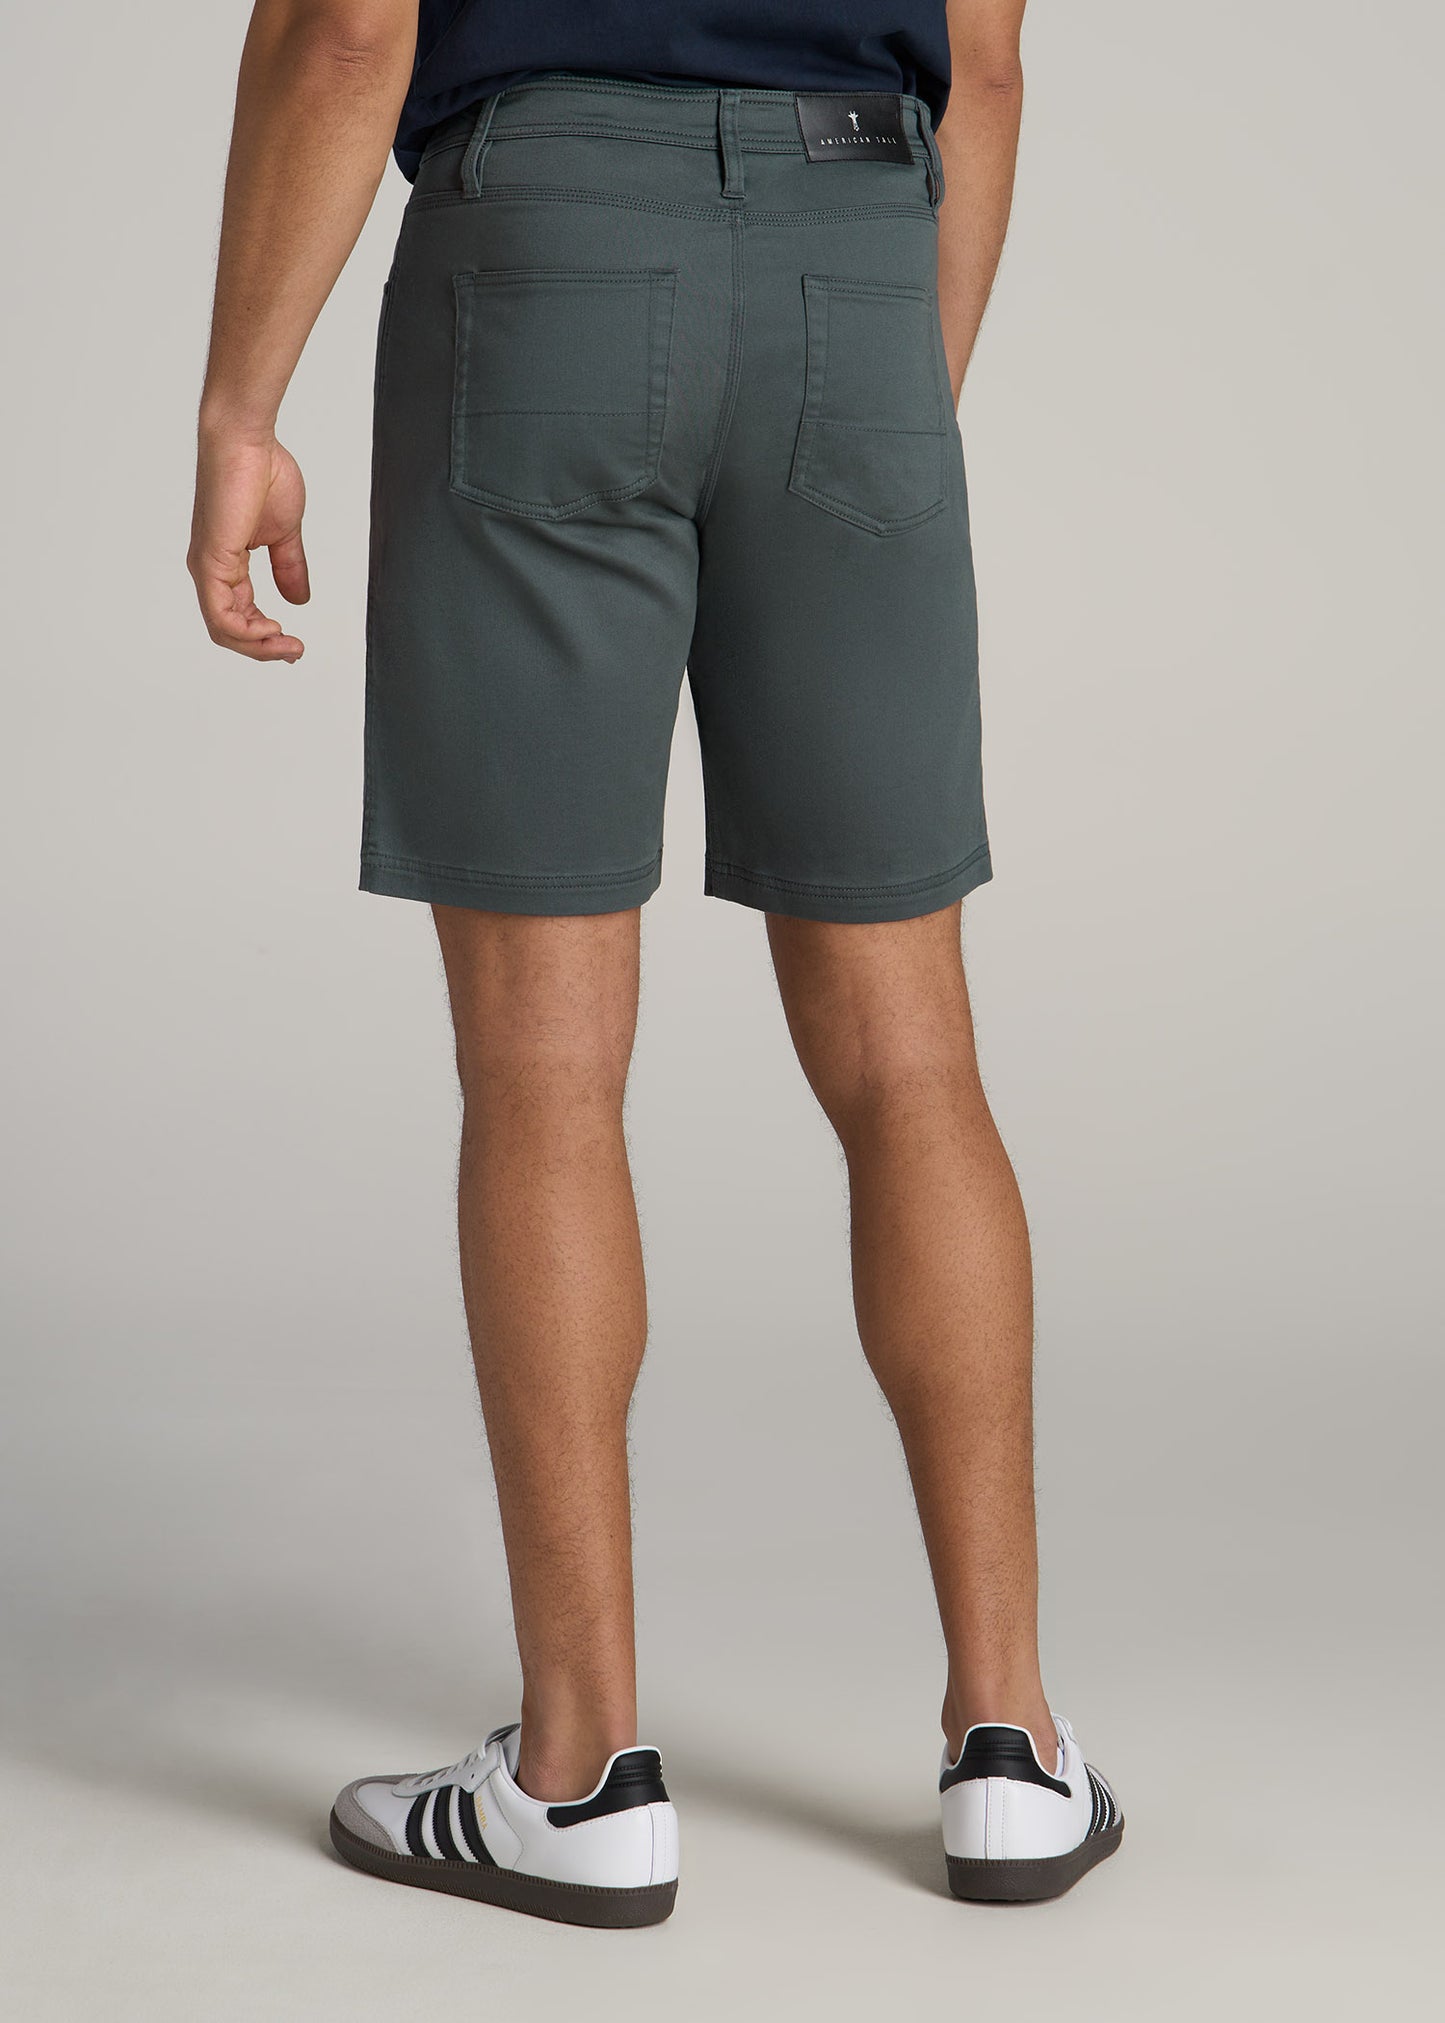 Everyday Comfort 5 Pocket Short for Tall Men in Soft Green